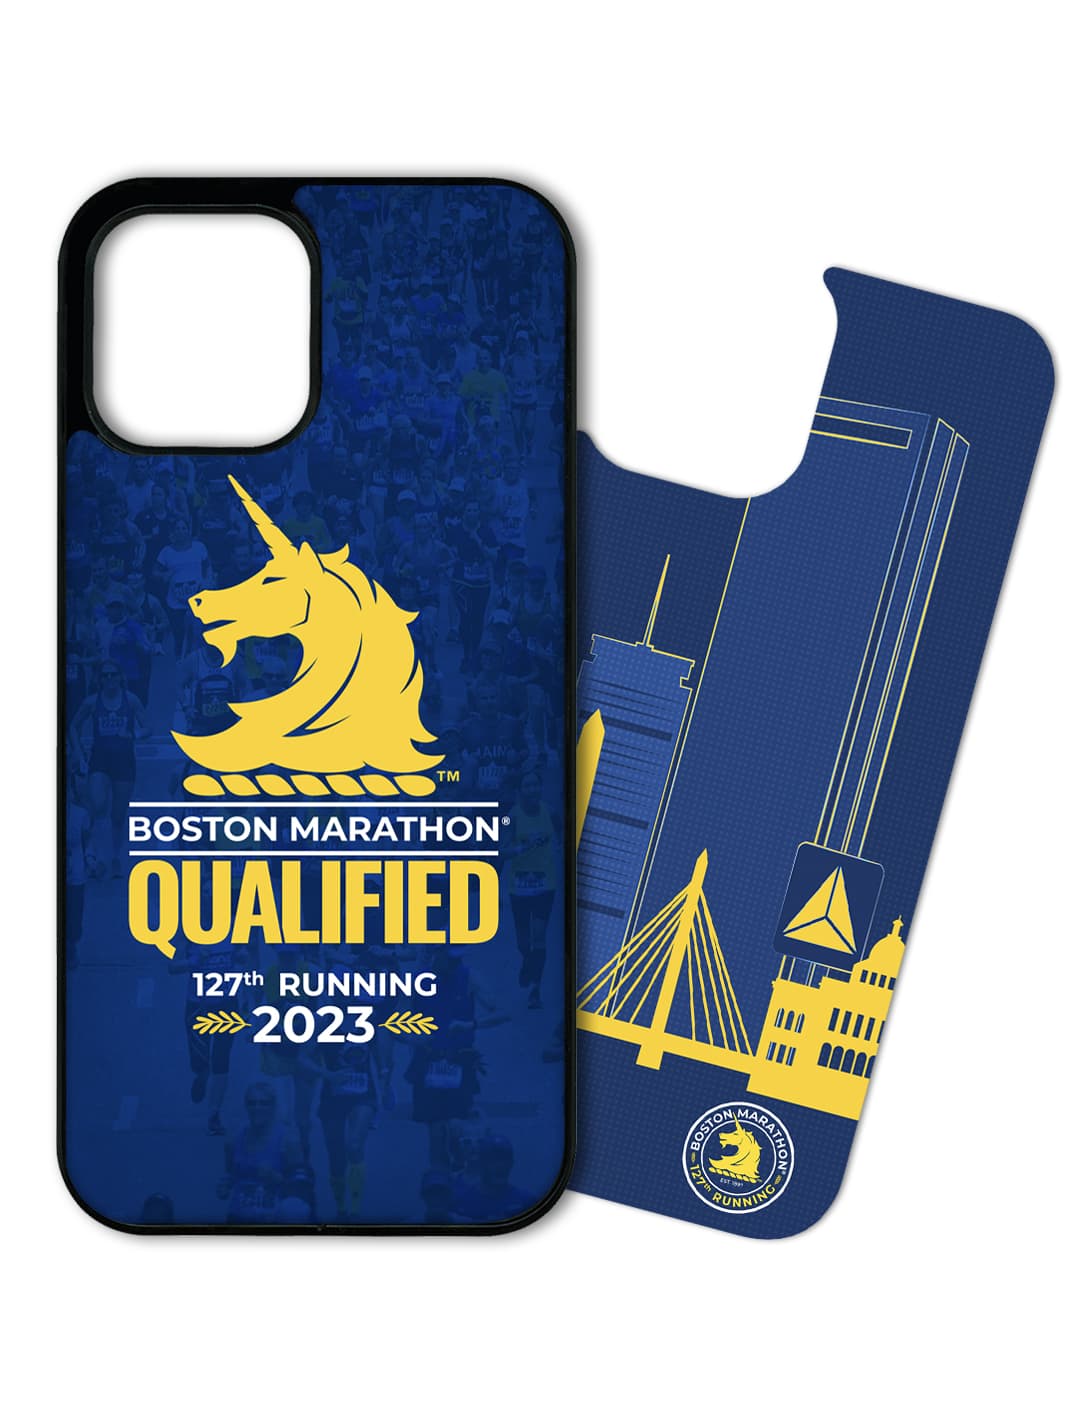 Phone Case Set - Boston Marathon® Qualified 1